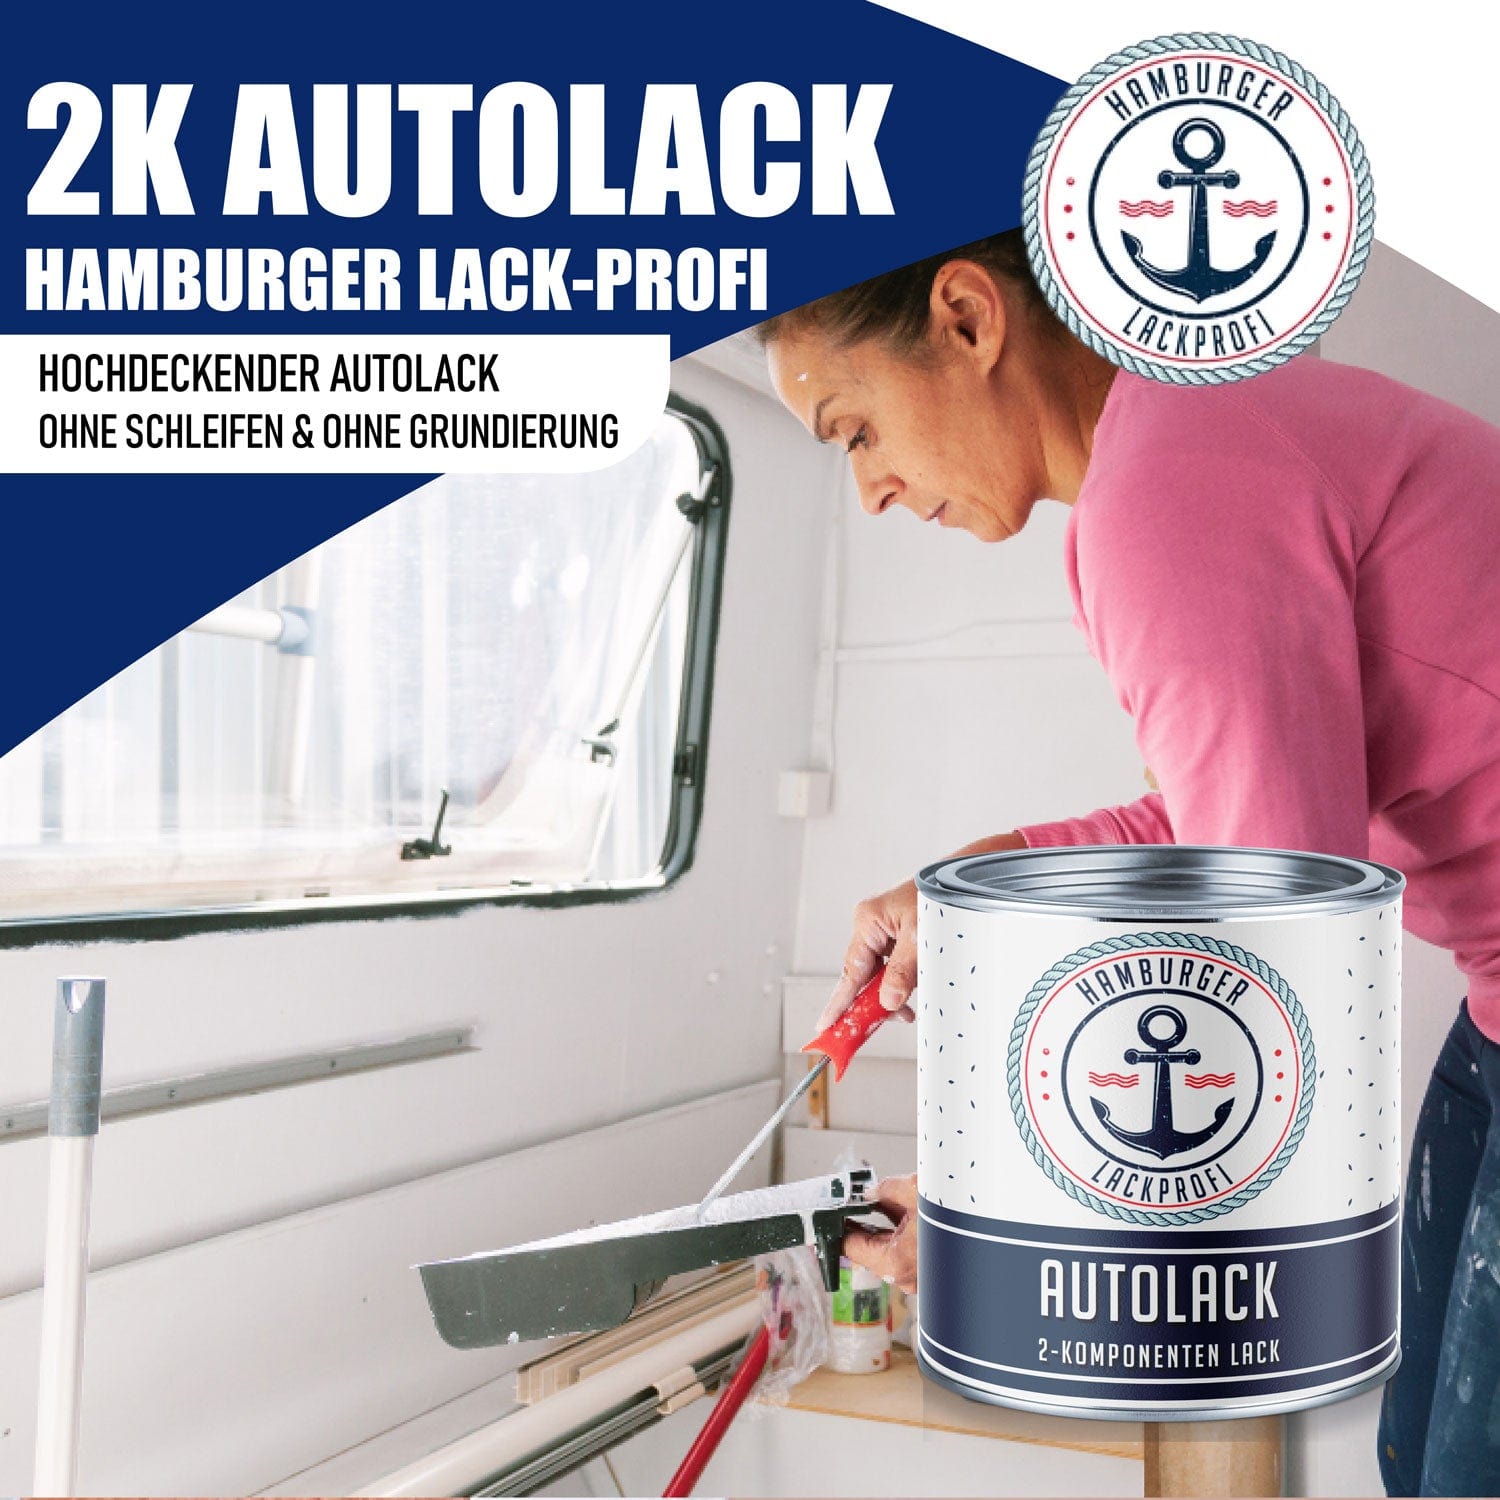 Hamburger Lack-Profi Lacke & Beschichtungen Hamburger Lack-Profi 2K Autolack in Verkehrsgrün RAL 6024 mit Lackierset (X300) & Verdünnung (1 L) - 30% Sparangebot